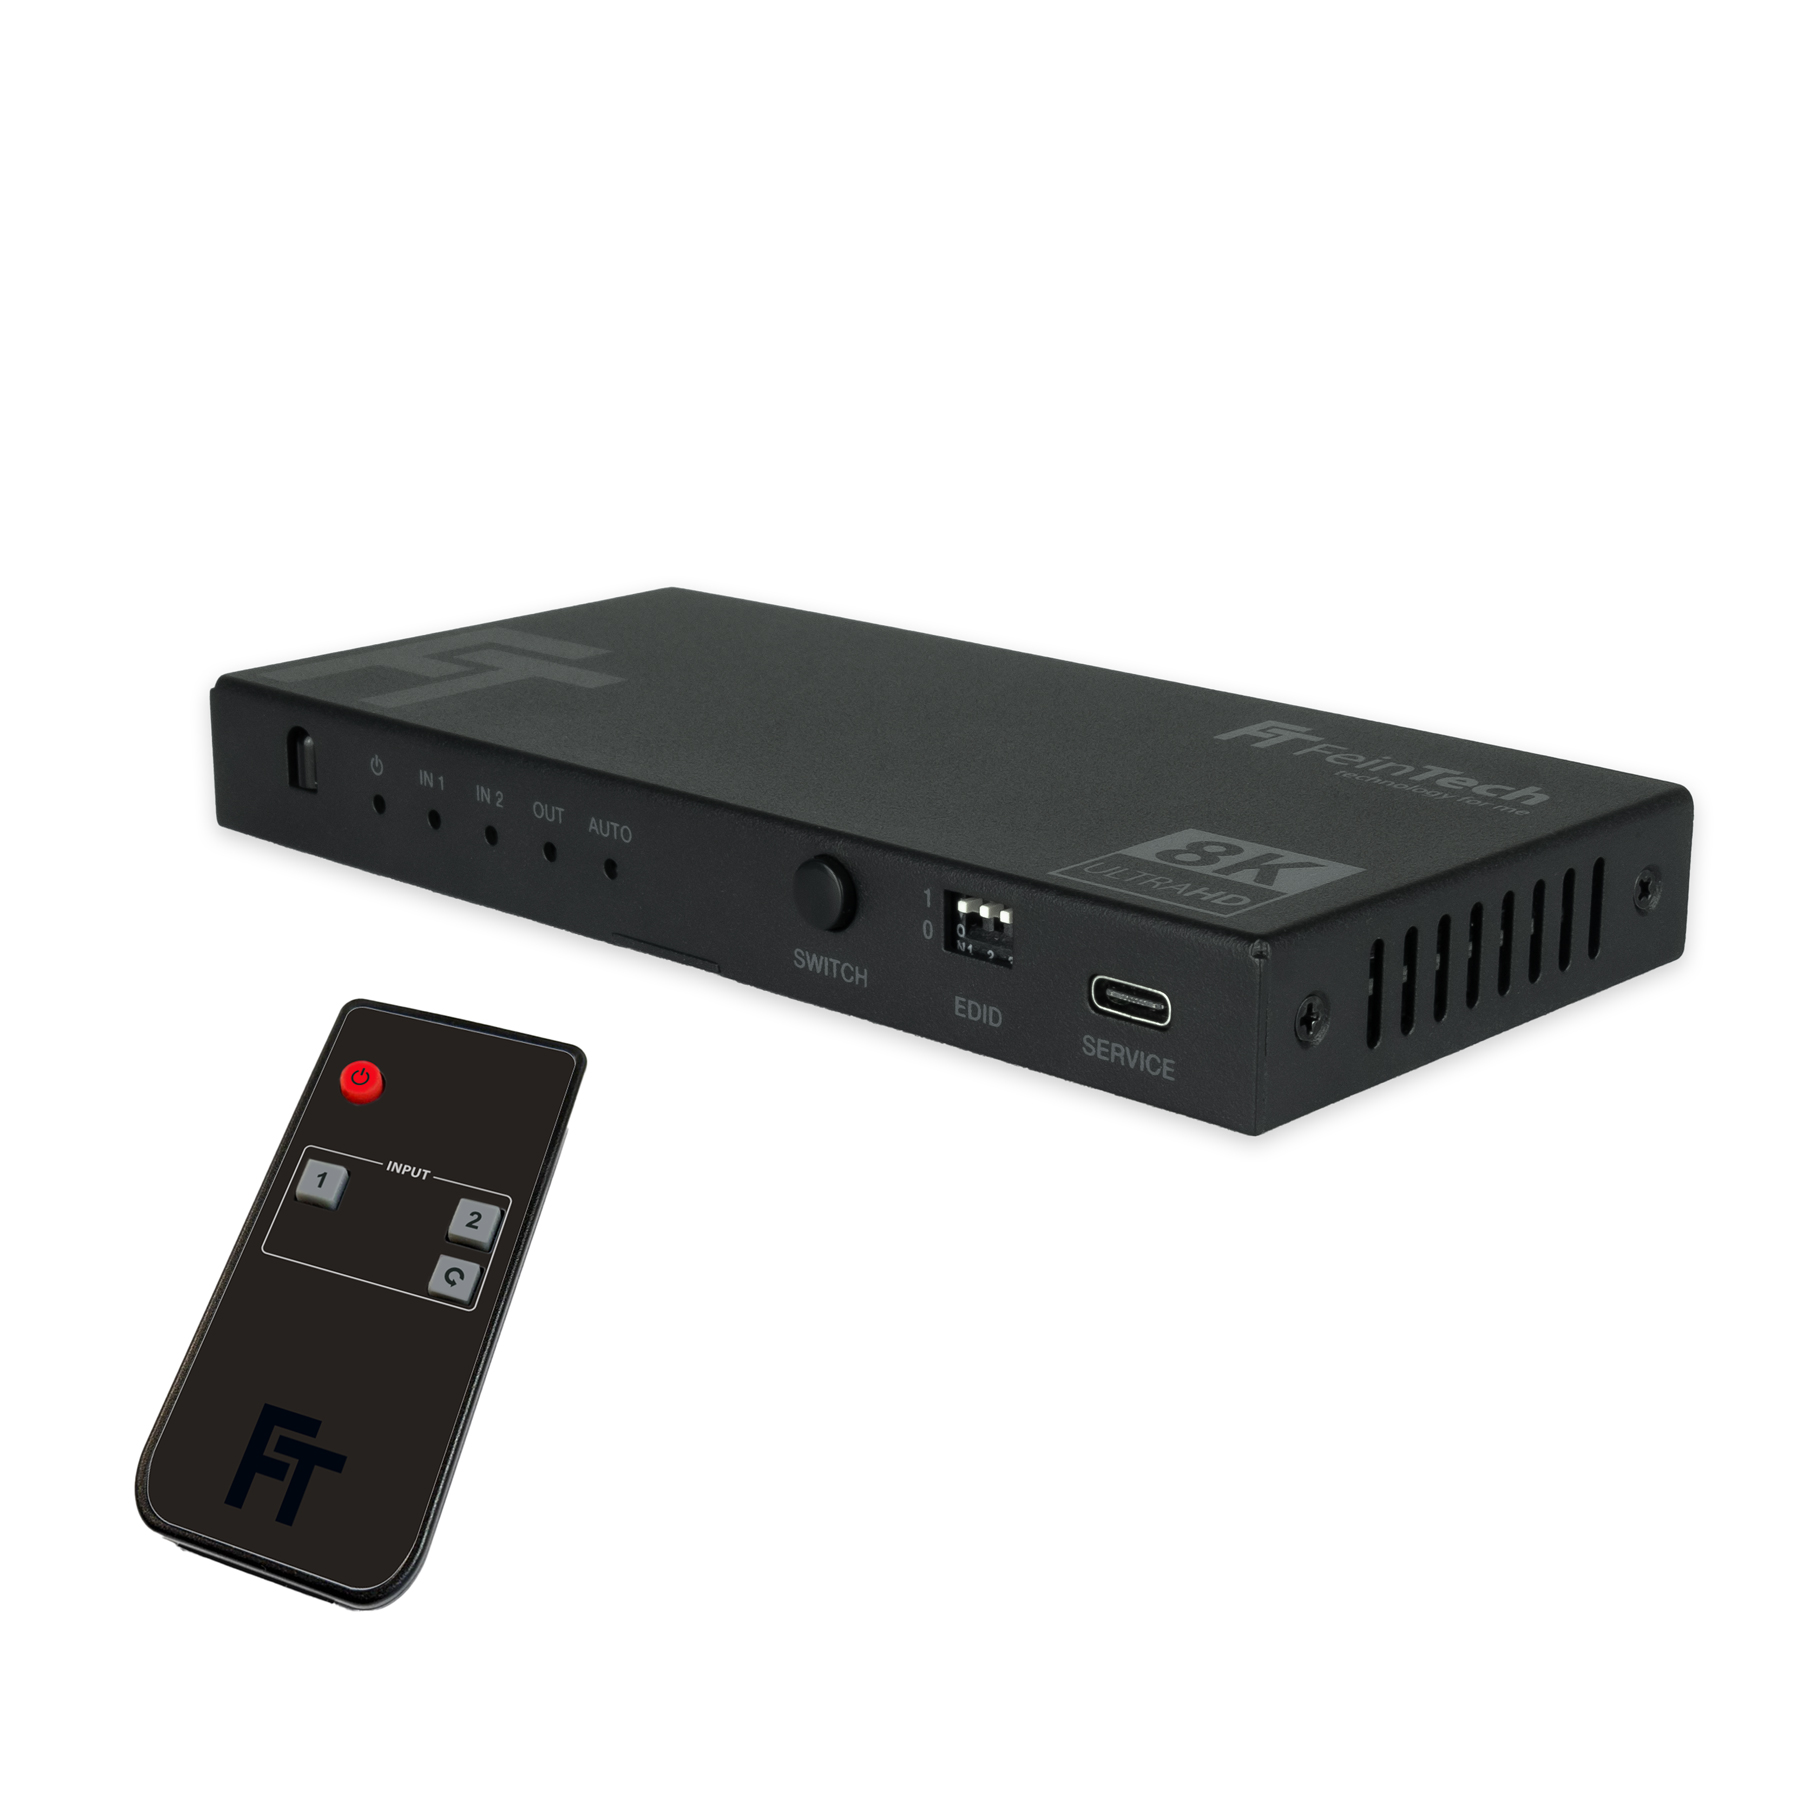 + 2x1 HDMI Extractor HDMI Audio Switch SW212 FEINTECH Switch 2.1